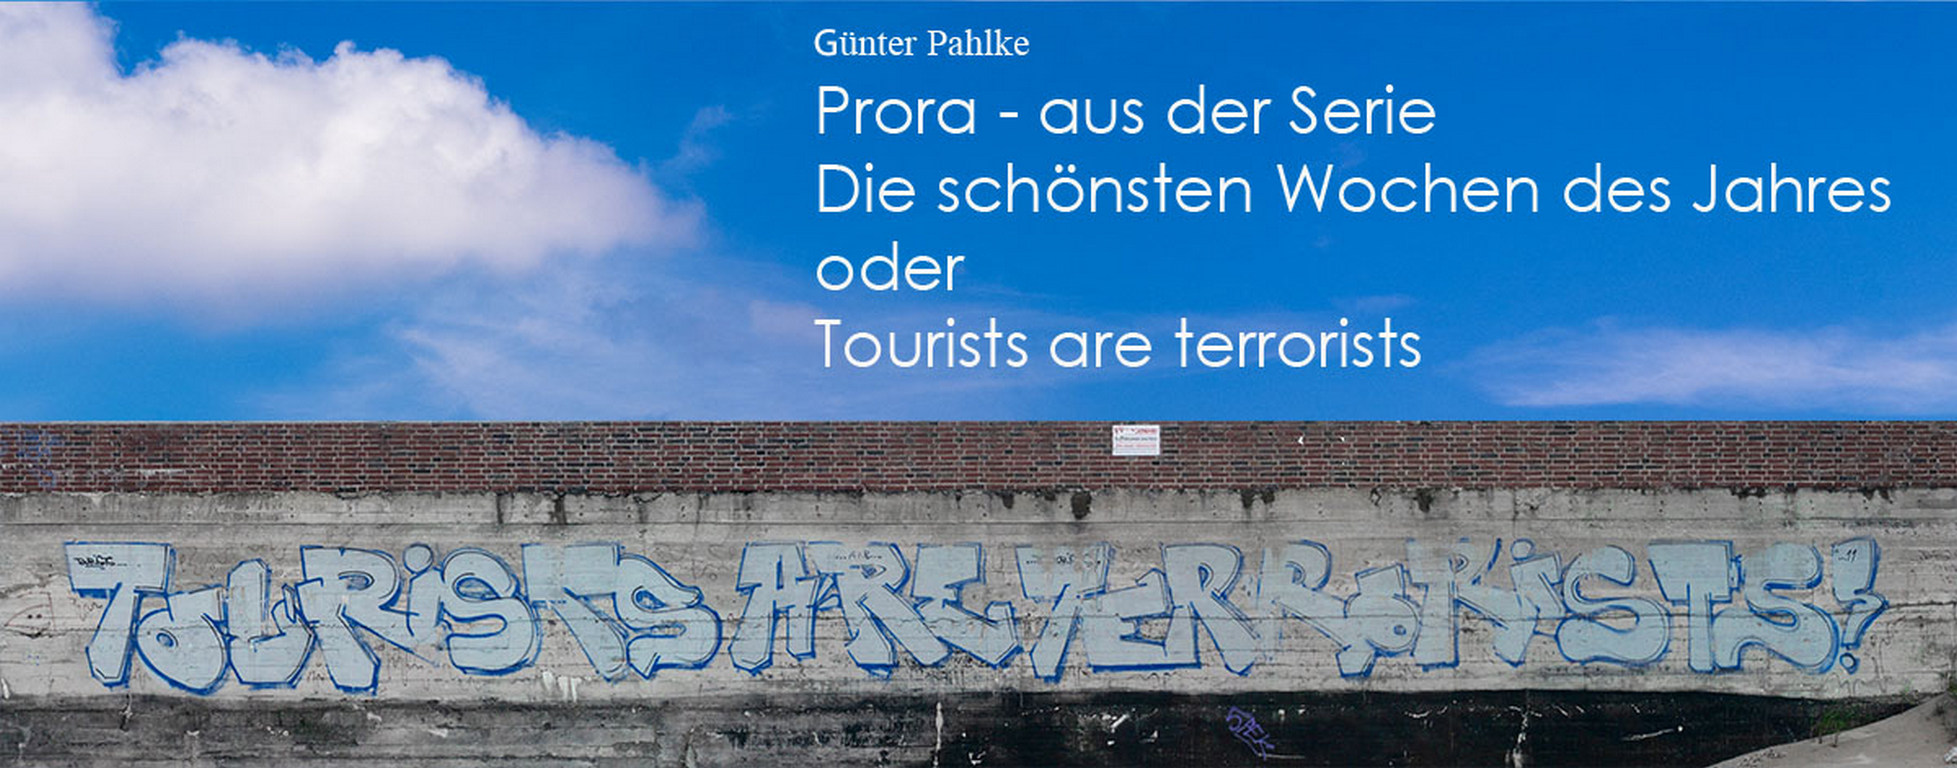 Tourists Are Terrorists